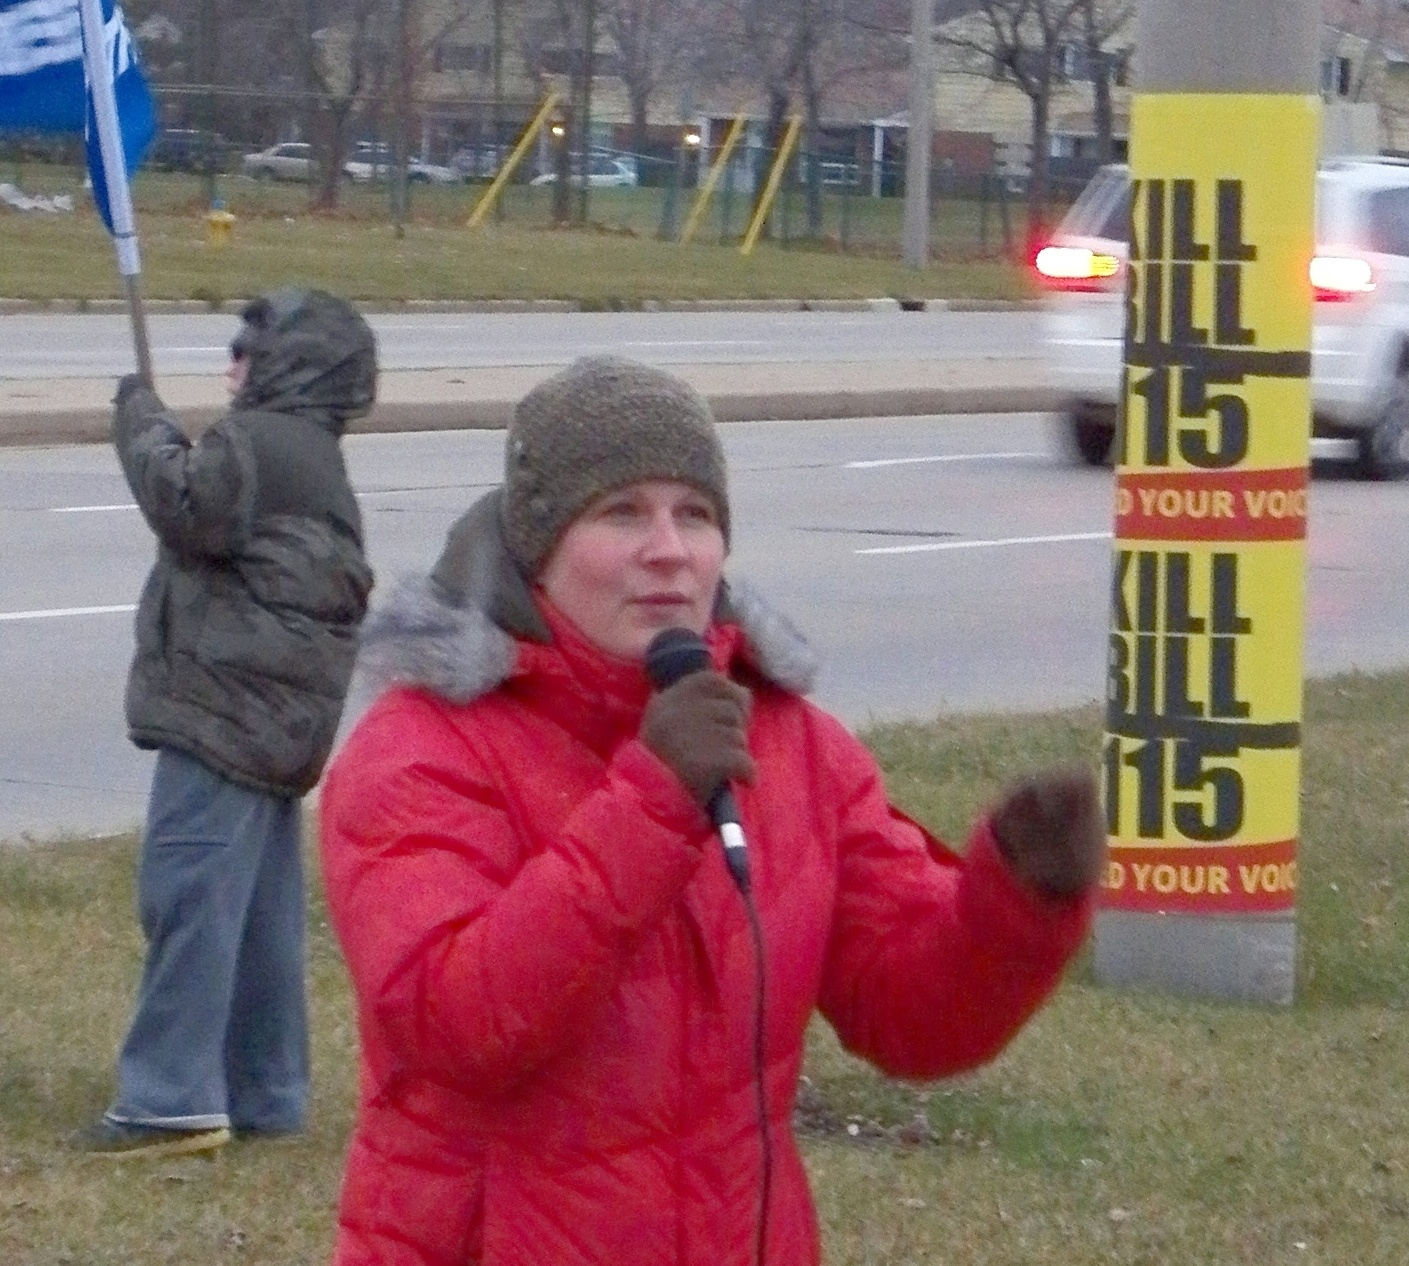 Laura Chesnik at rally to Kill Bill 115 in 2012